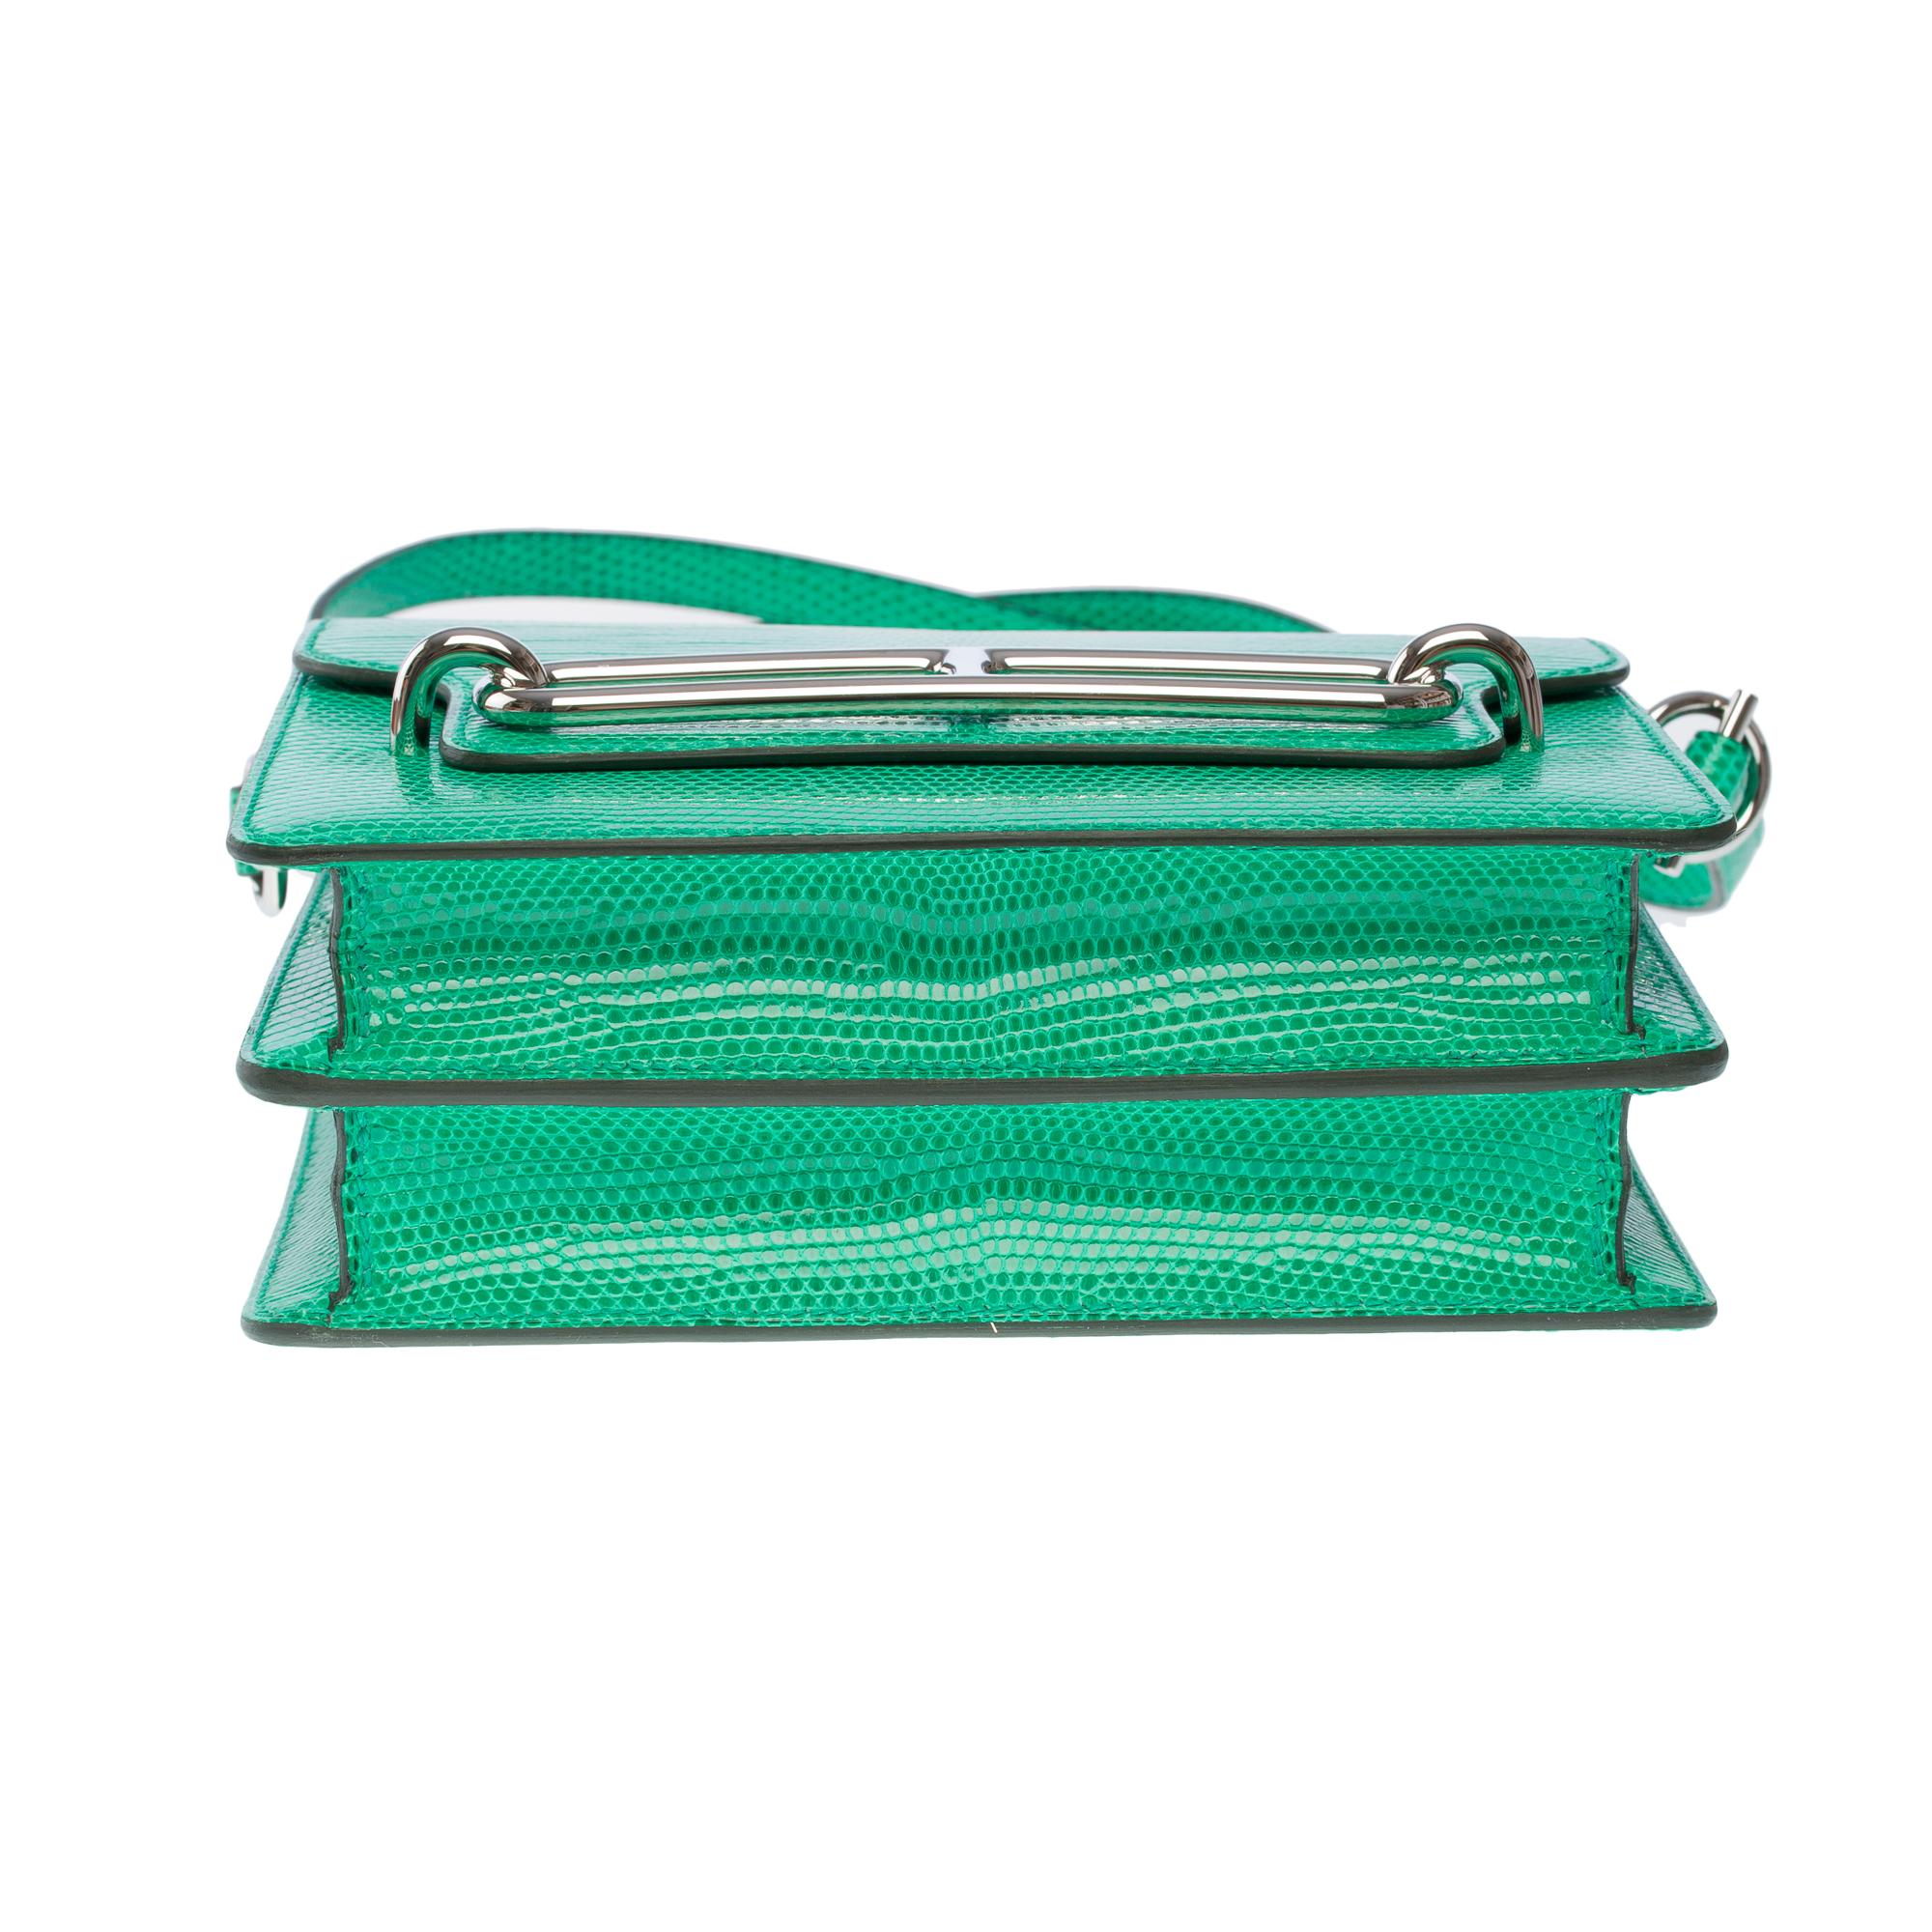 New Amazing Hermès Roulis 18 shoulder bag in mint green lizard, SHW For Sale 7